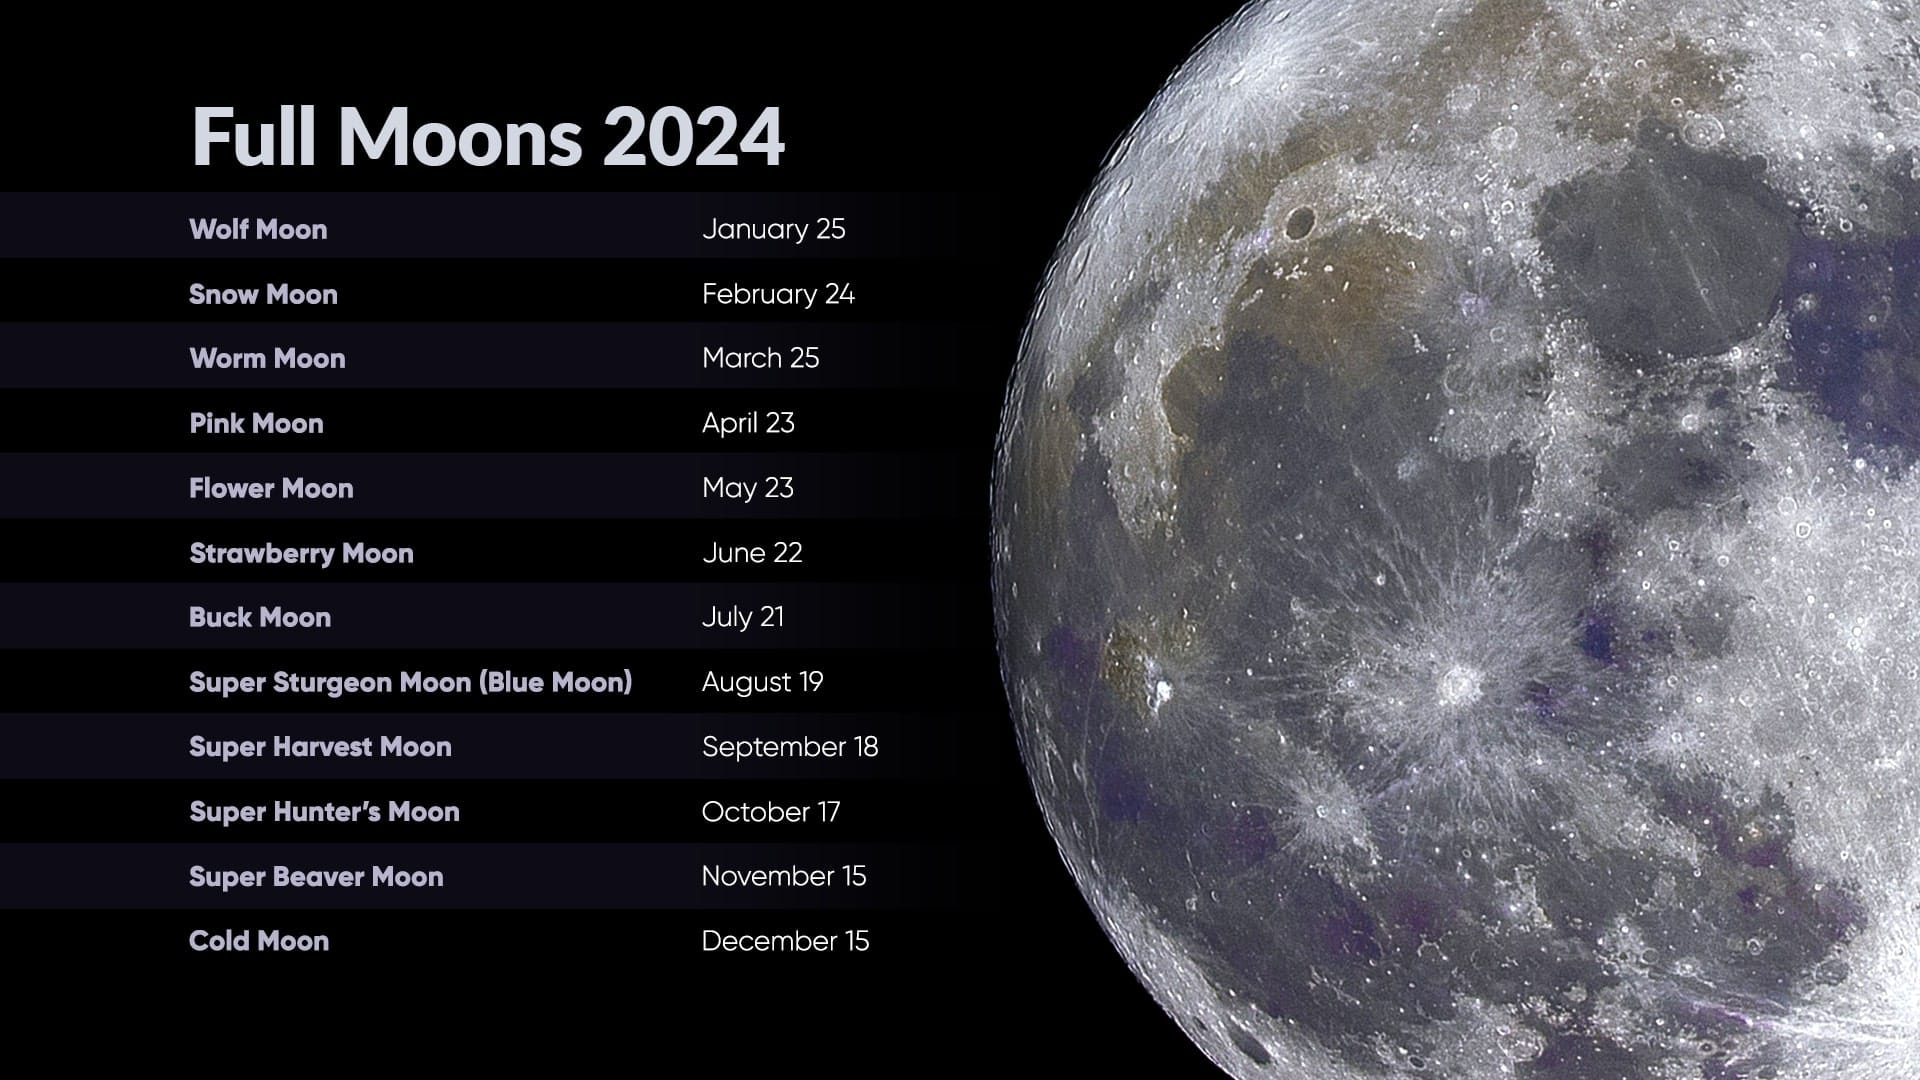 Next Full Moon | February Full Moon 2024 | Full Moon Schedule 2024 with July 2Nd Lunar Calendar 2024